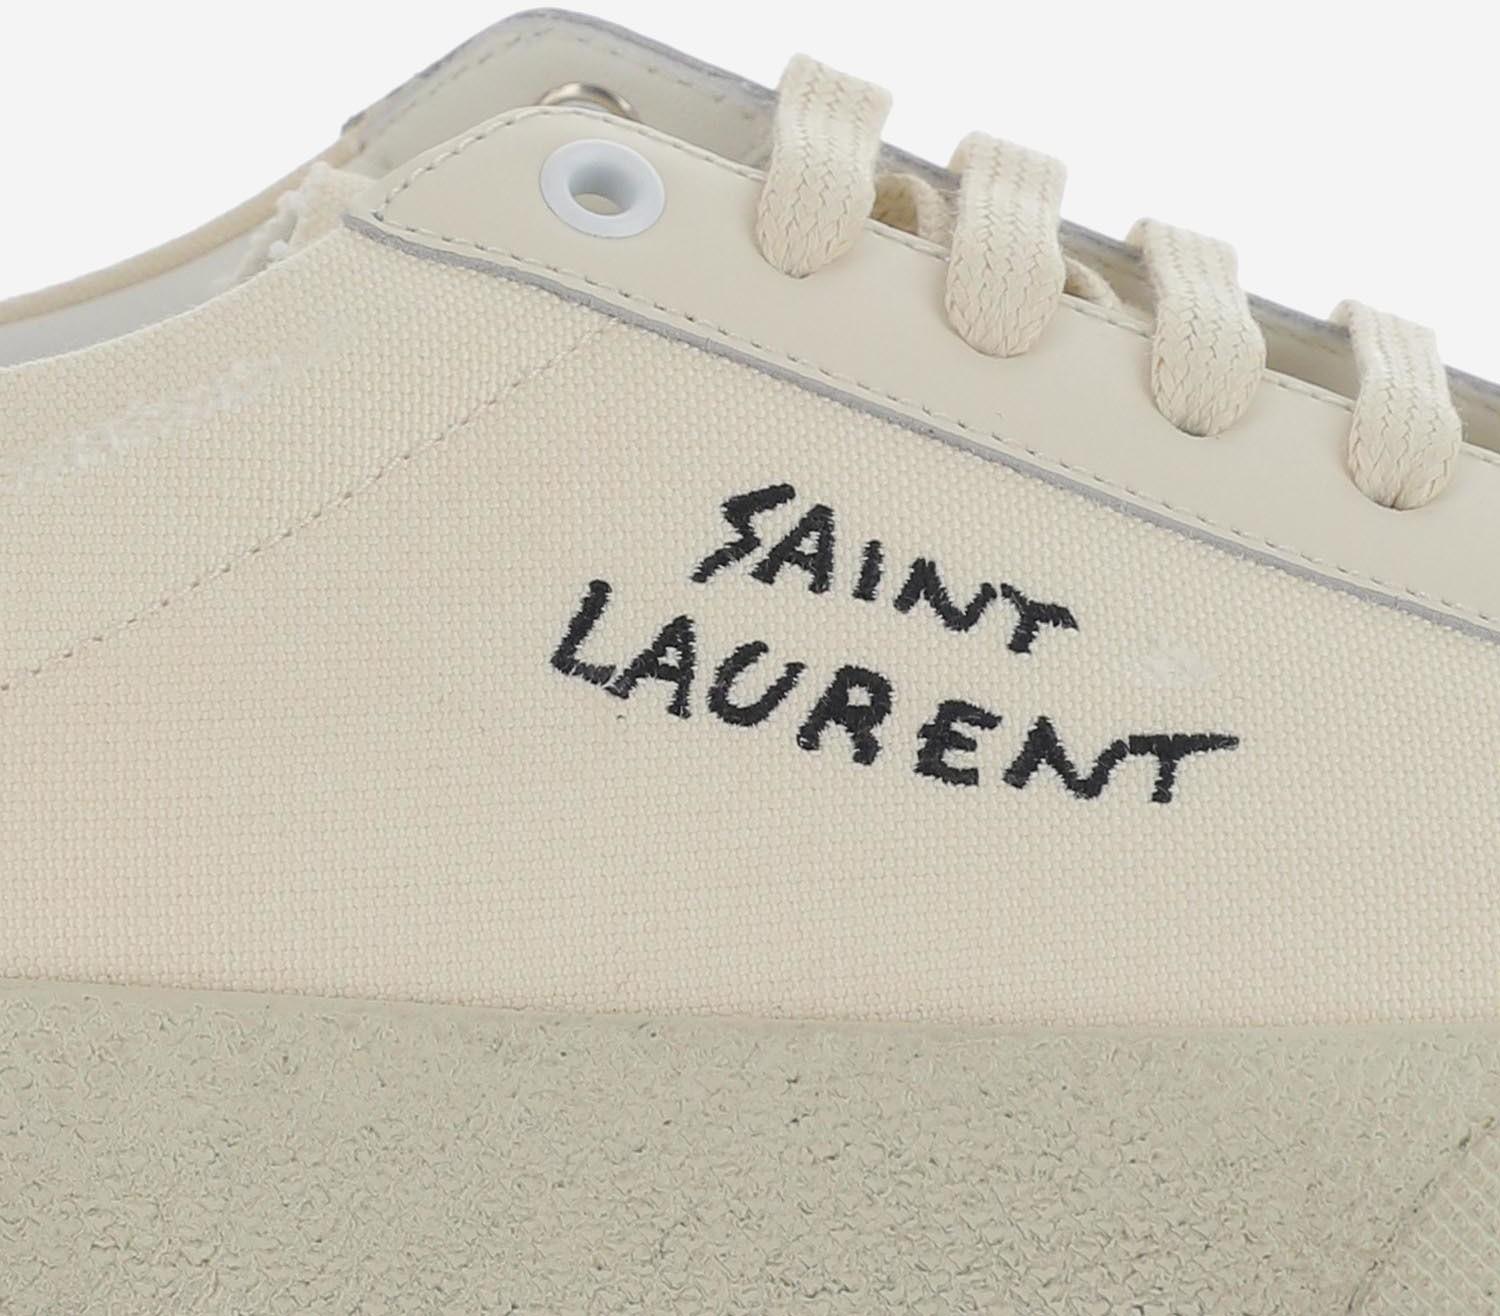 Court Classic SL 06 Canvas Sneakers in White - Saint Laurent